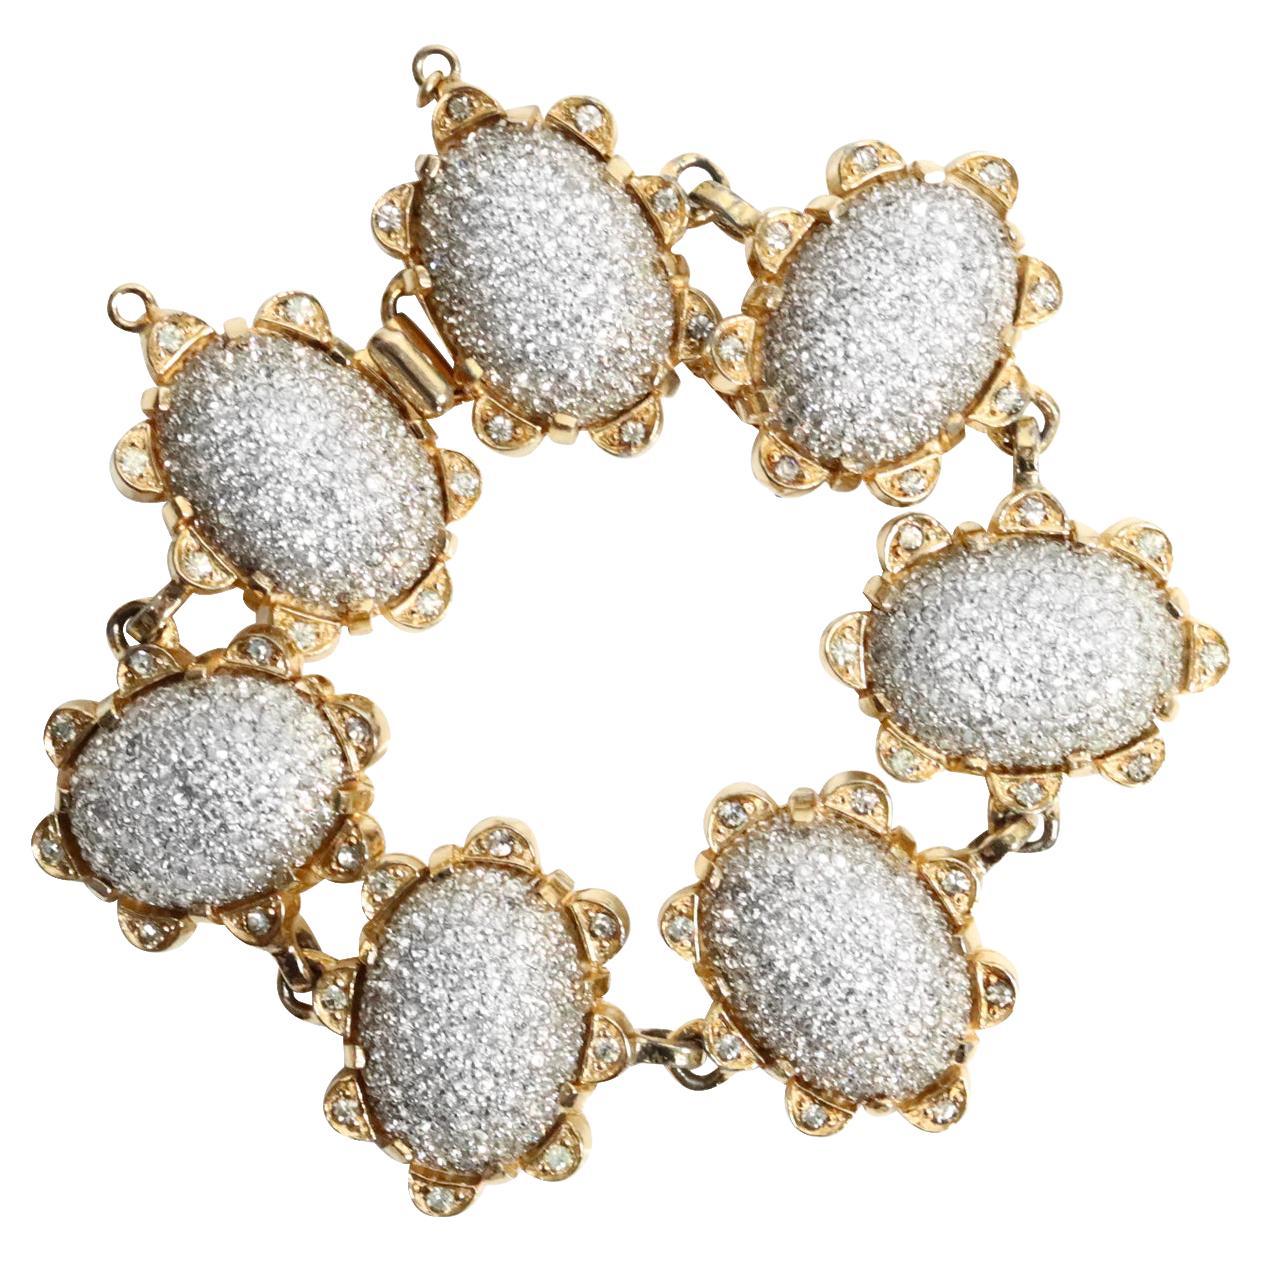 Vintage Nettie Rosenstein Gold Diamante Bracelet Circa 1960s